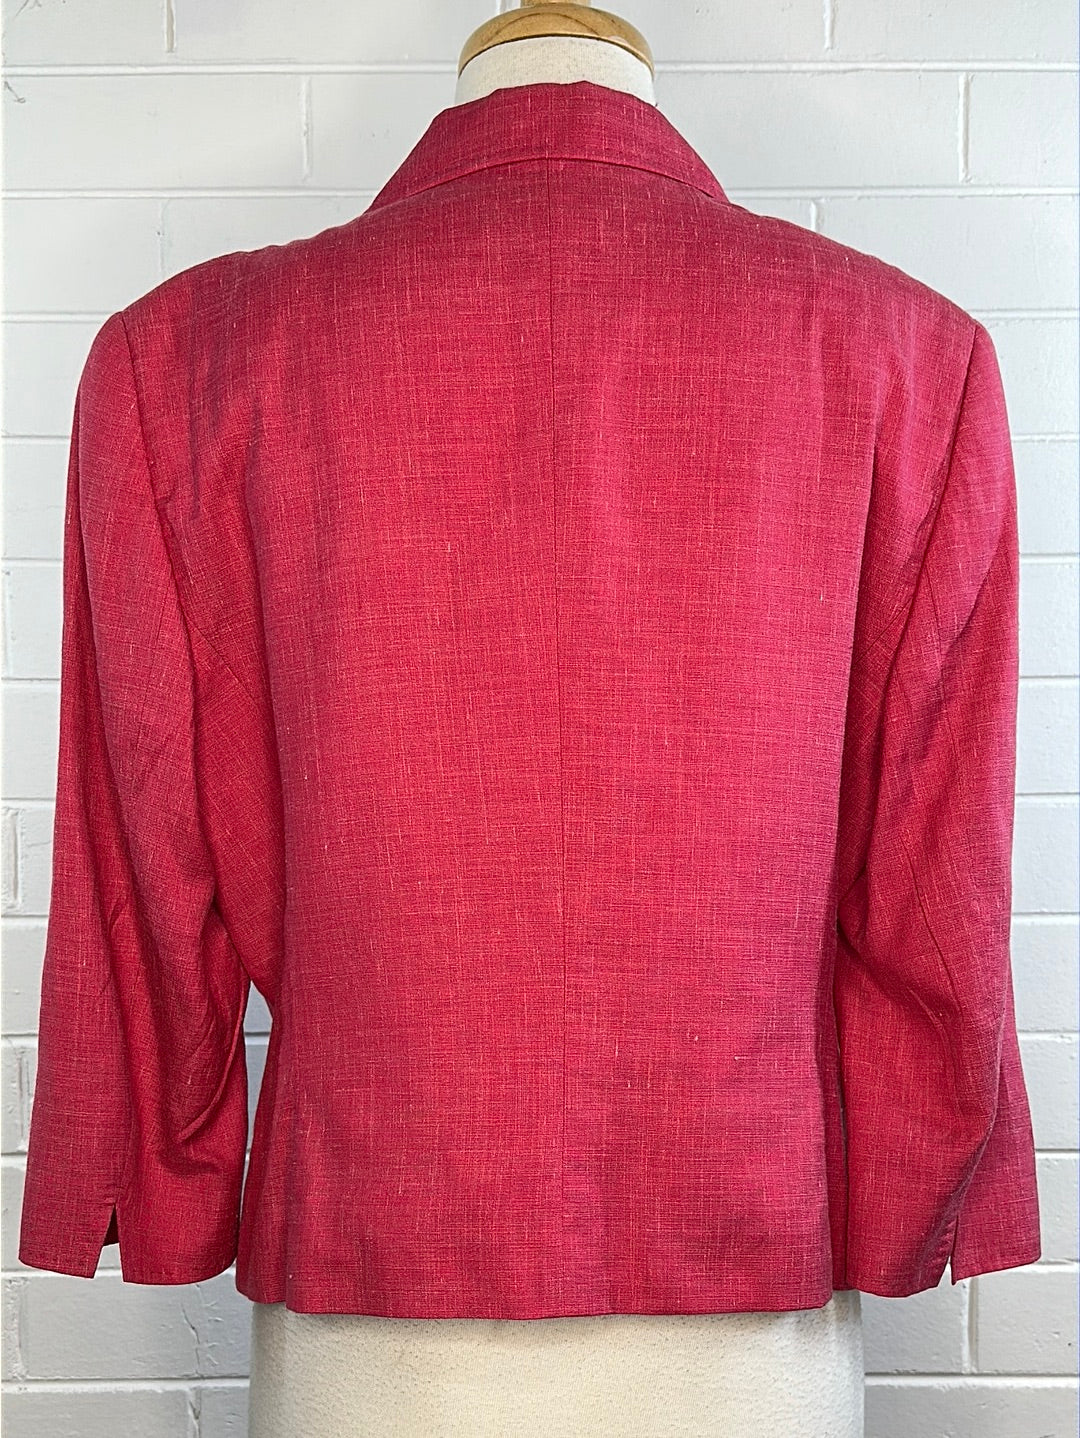 Escada | Munich | jacket | size 12 | single breasted | silk linen blend